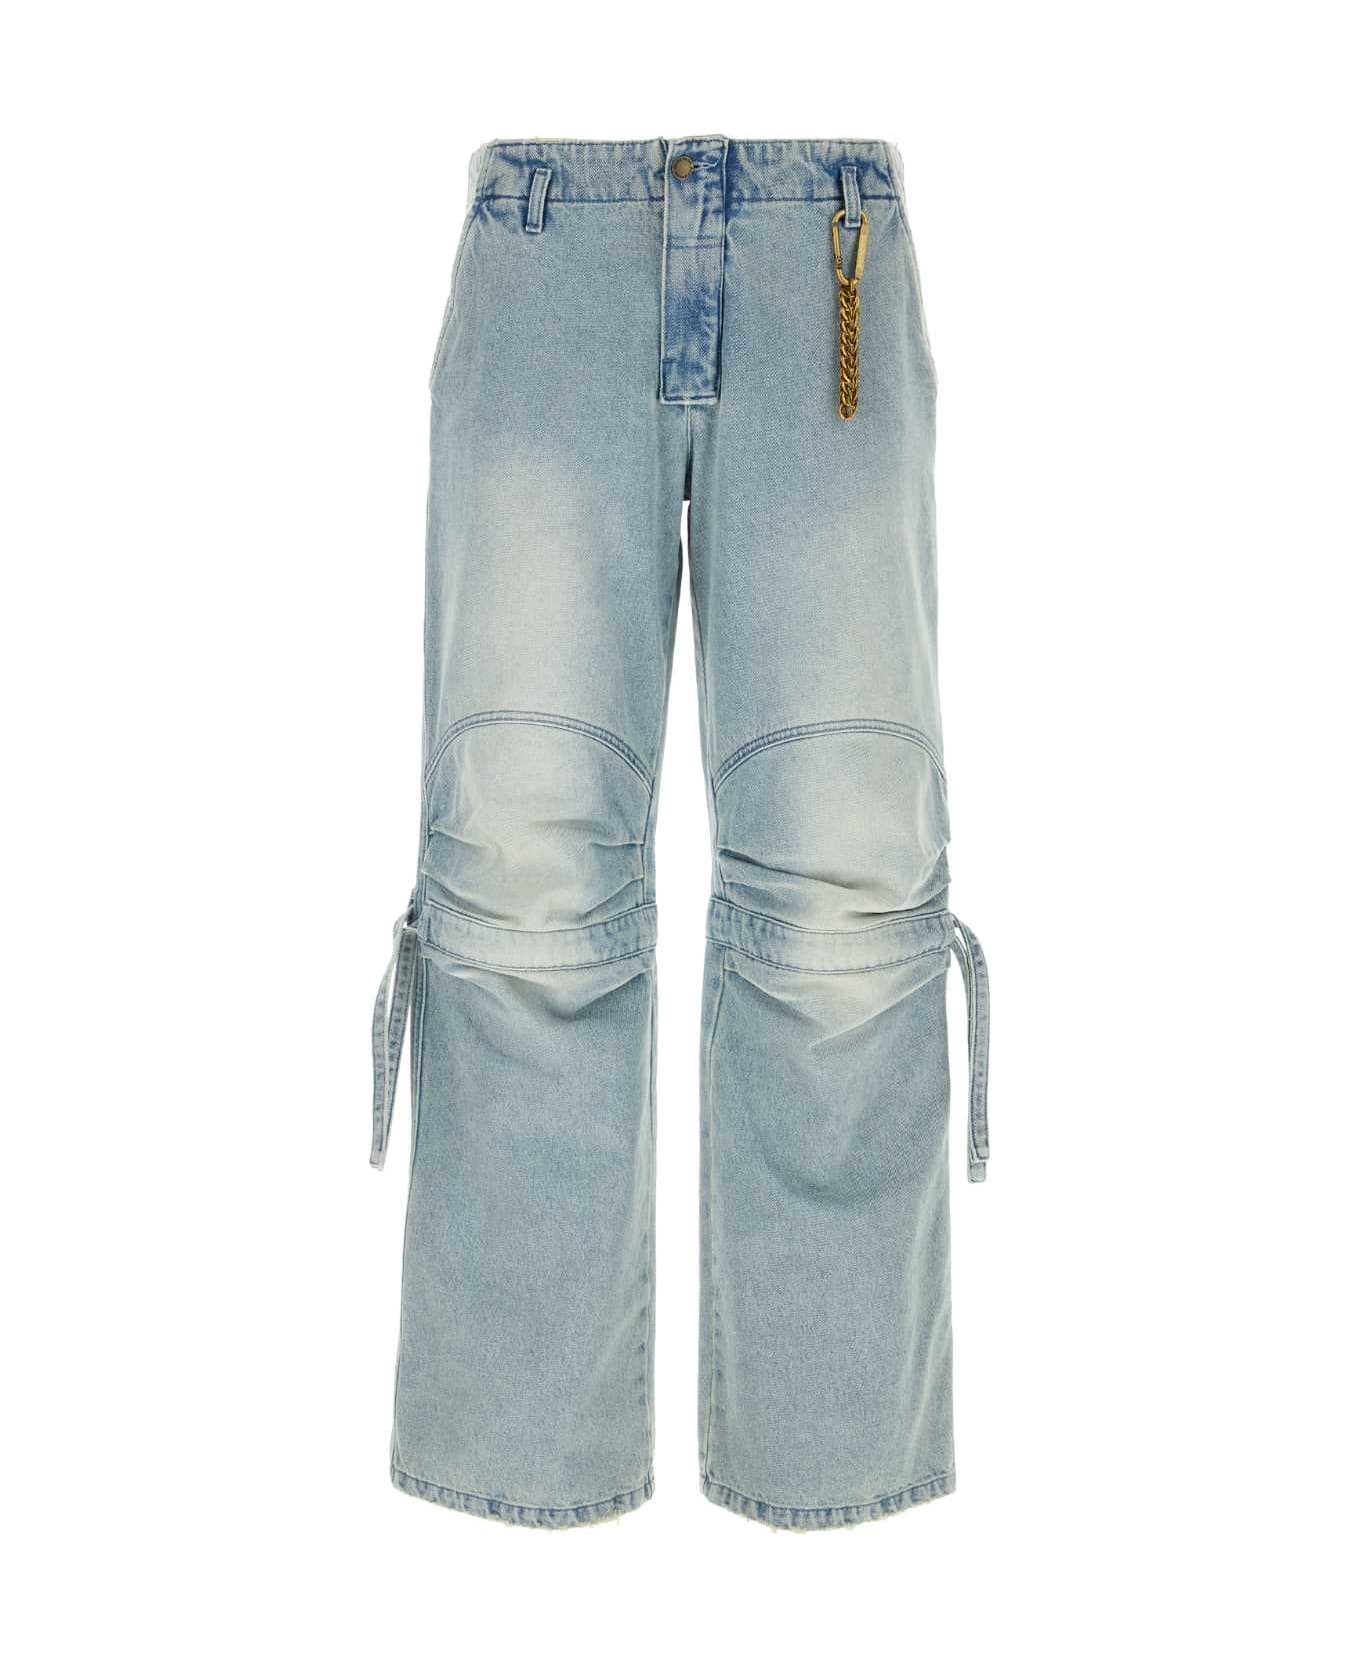 DARKPARK Denim Harper Jeans - LILLIGHT デニム